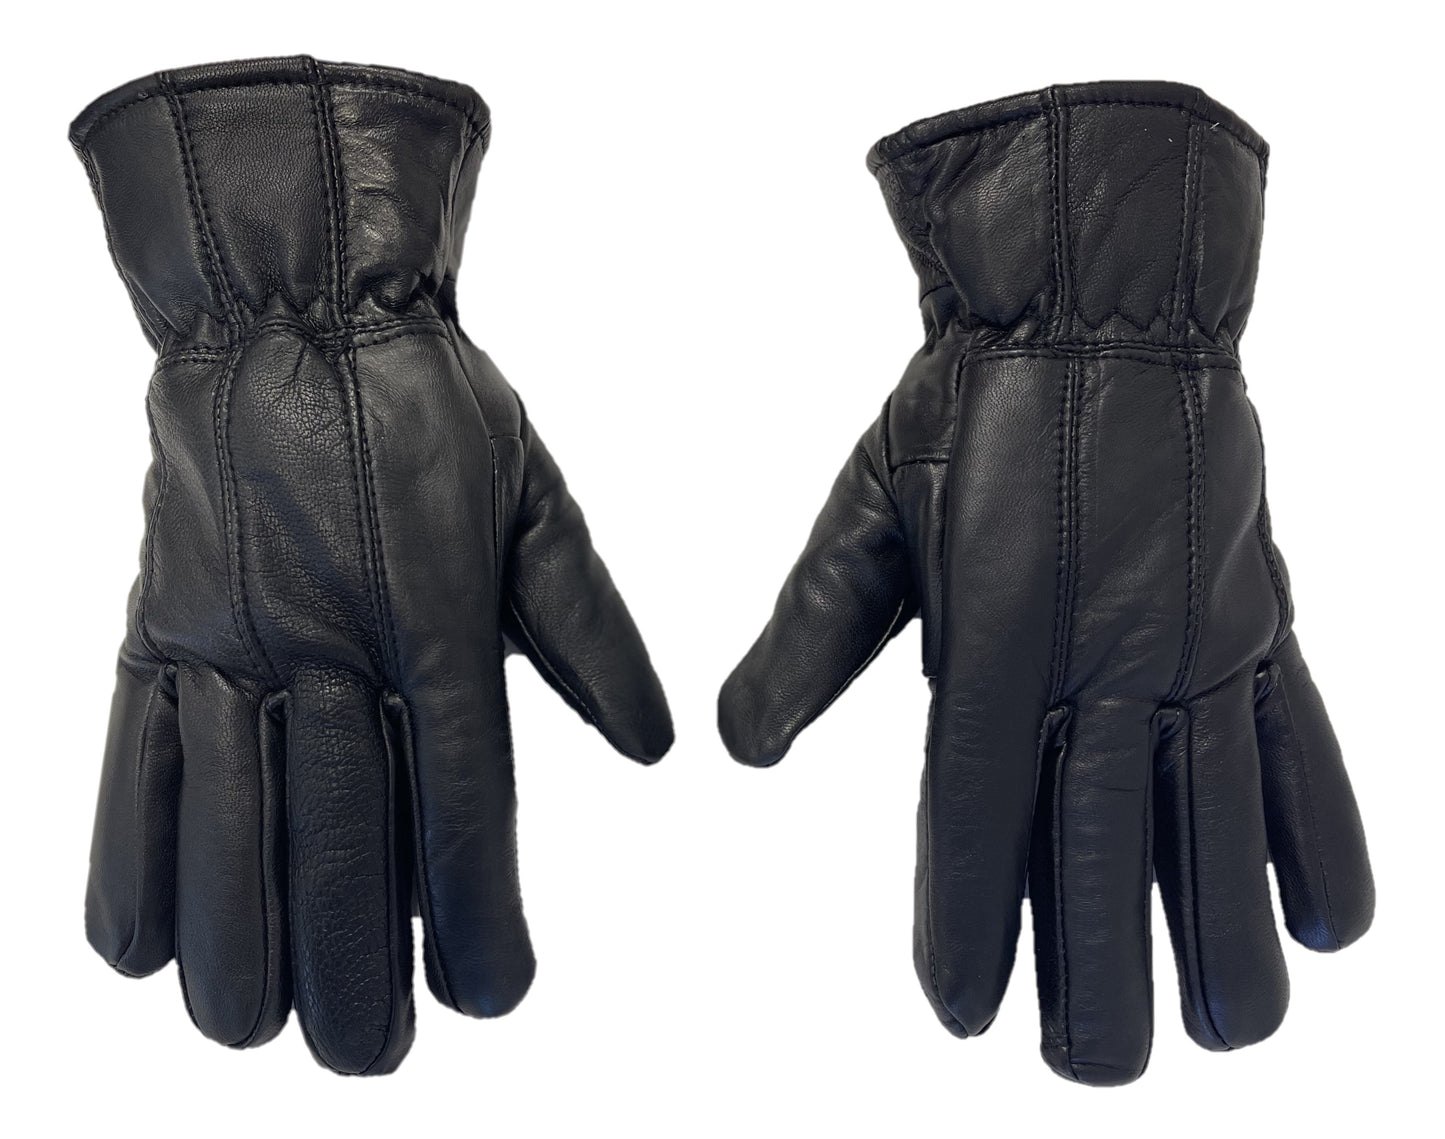 Men's Super Soft Warm Black Sheepskin Leather Gloves with Warm Fleece Lining